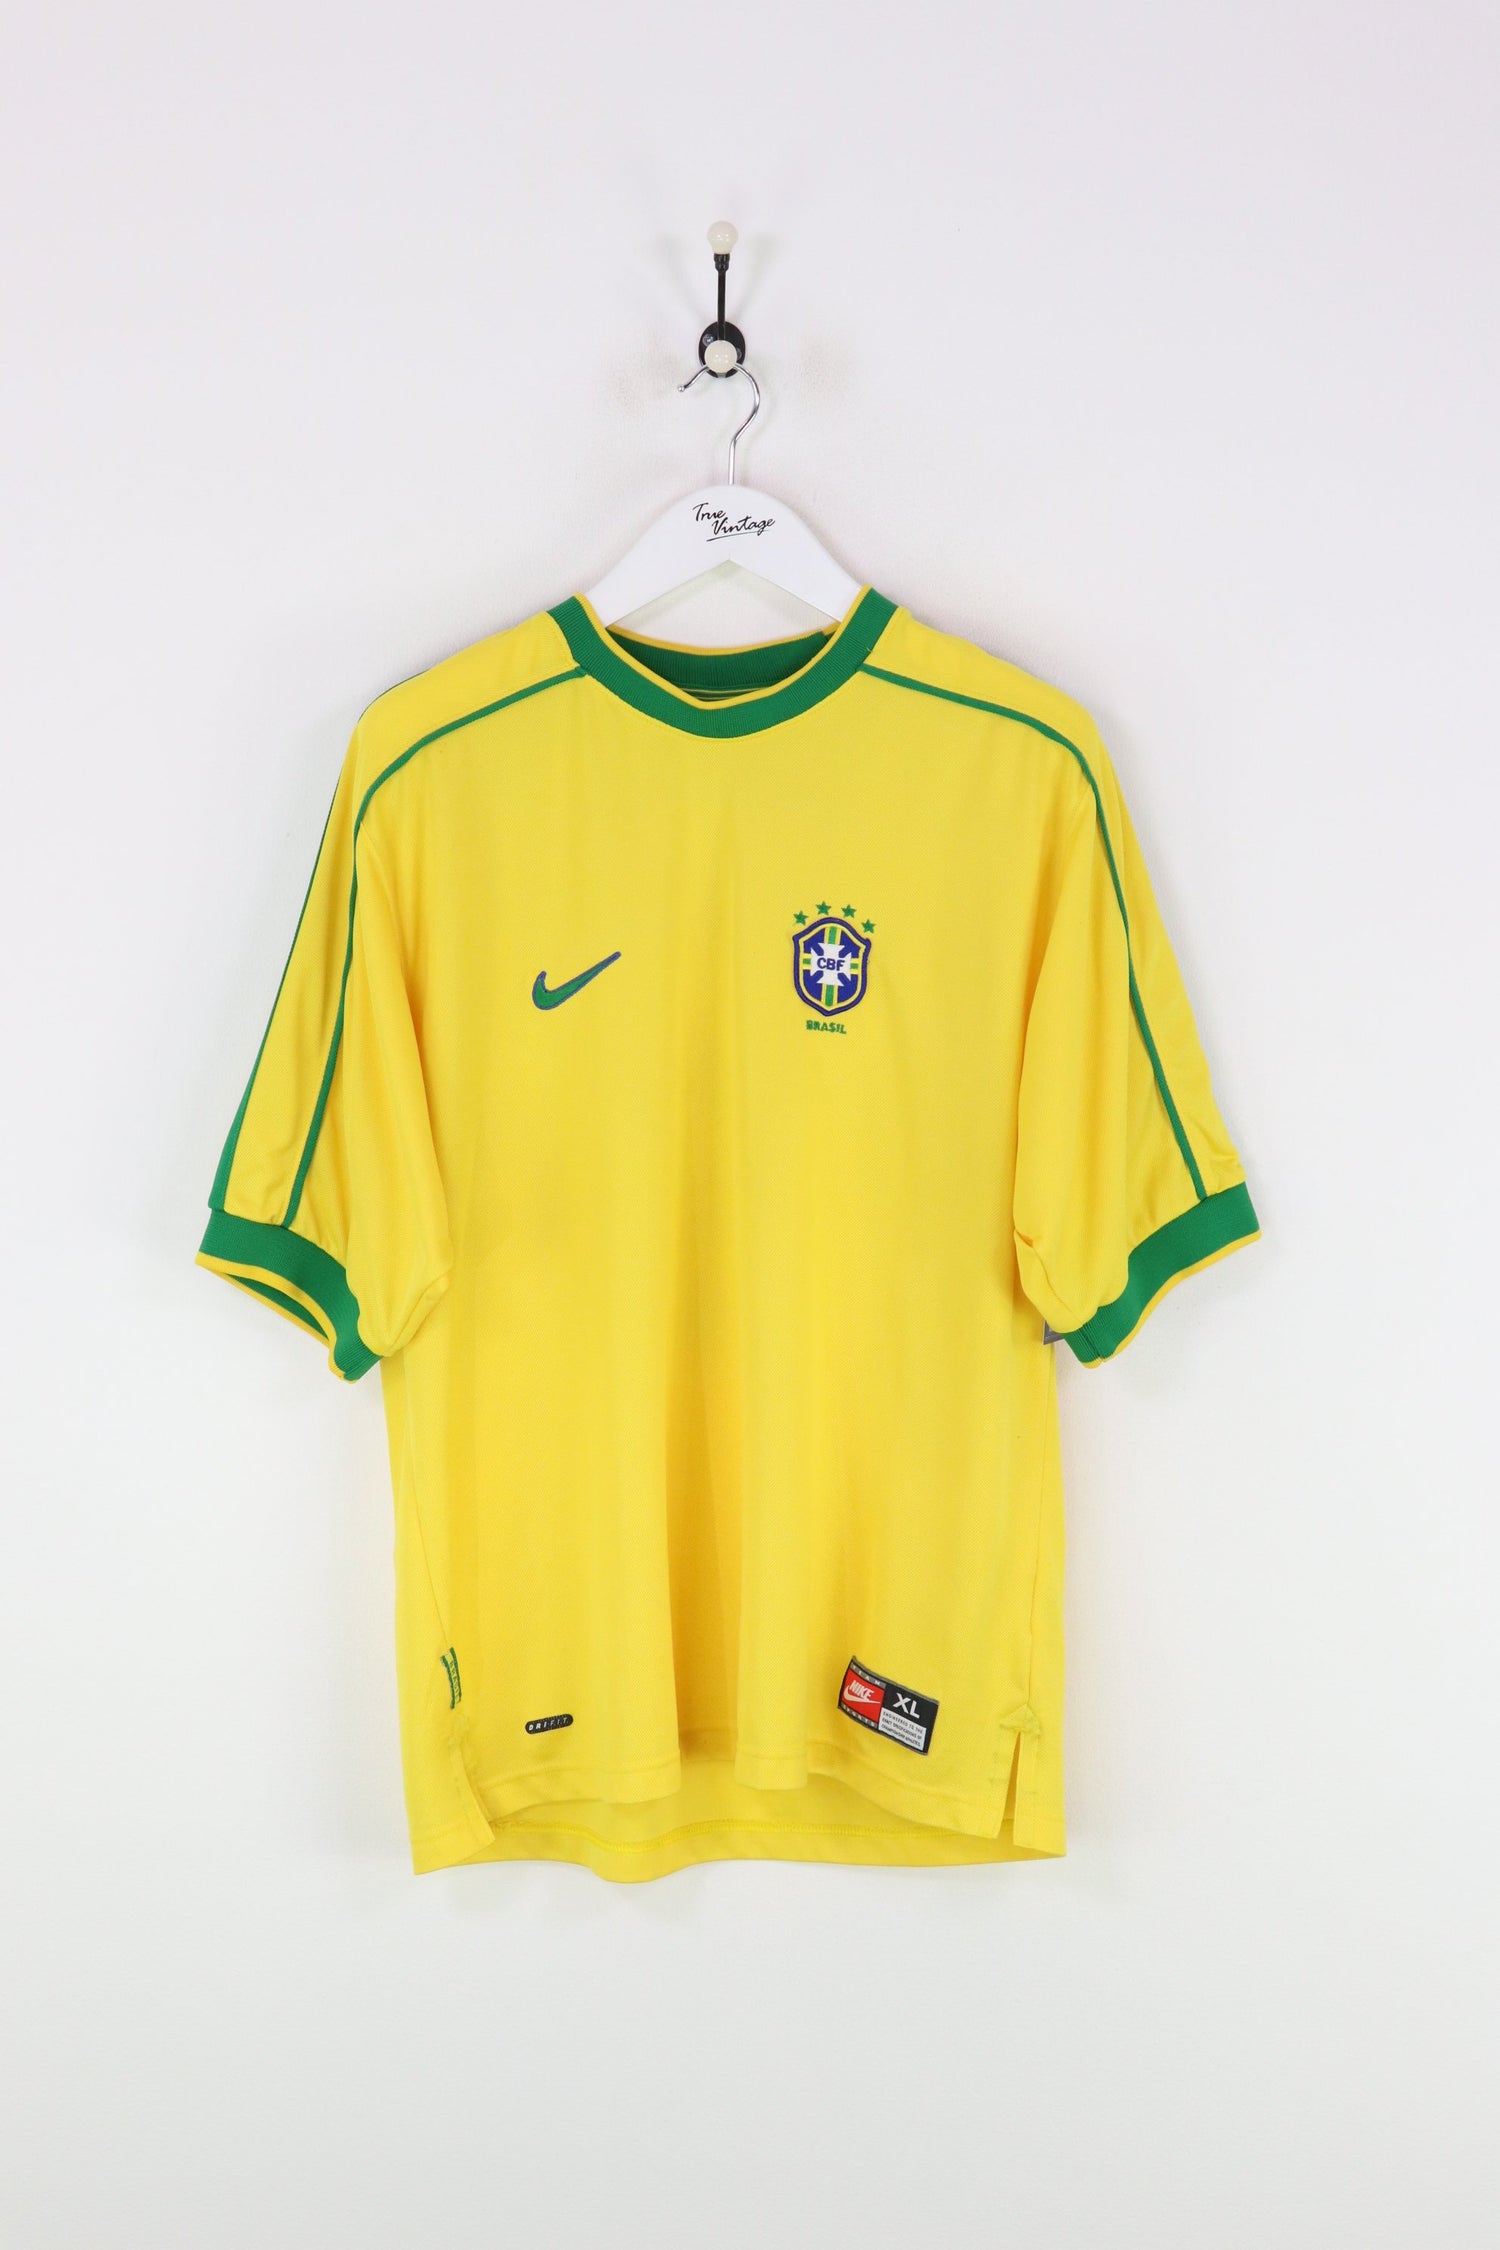 Nike Brazil Ronaldo Football Shirt Yellow XL